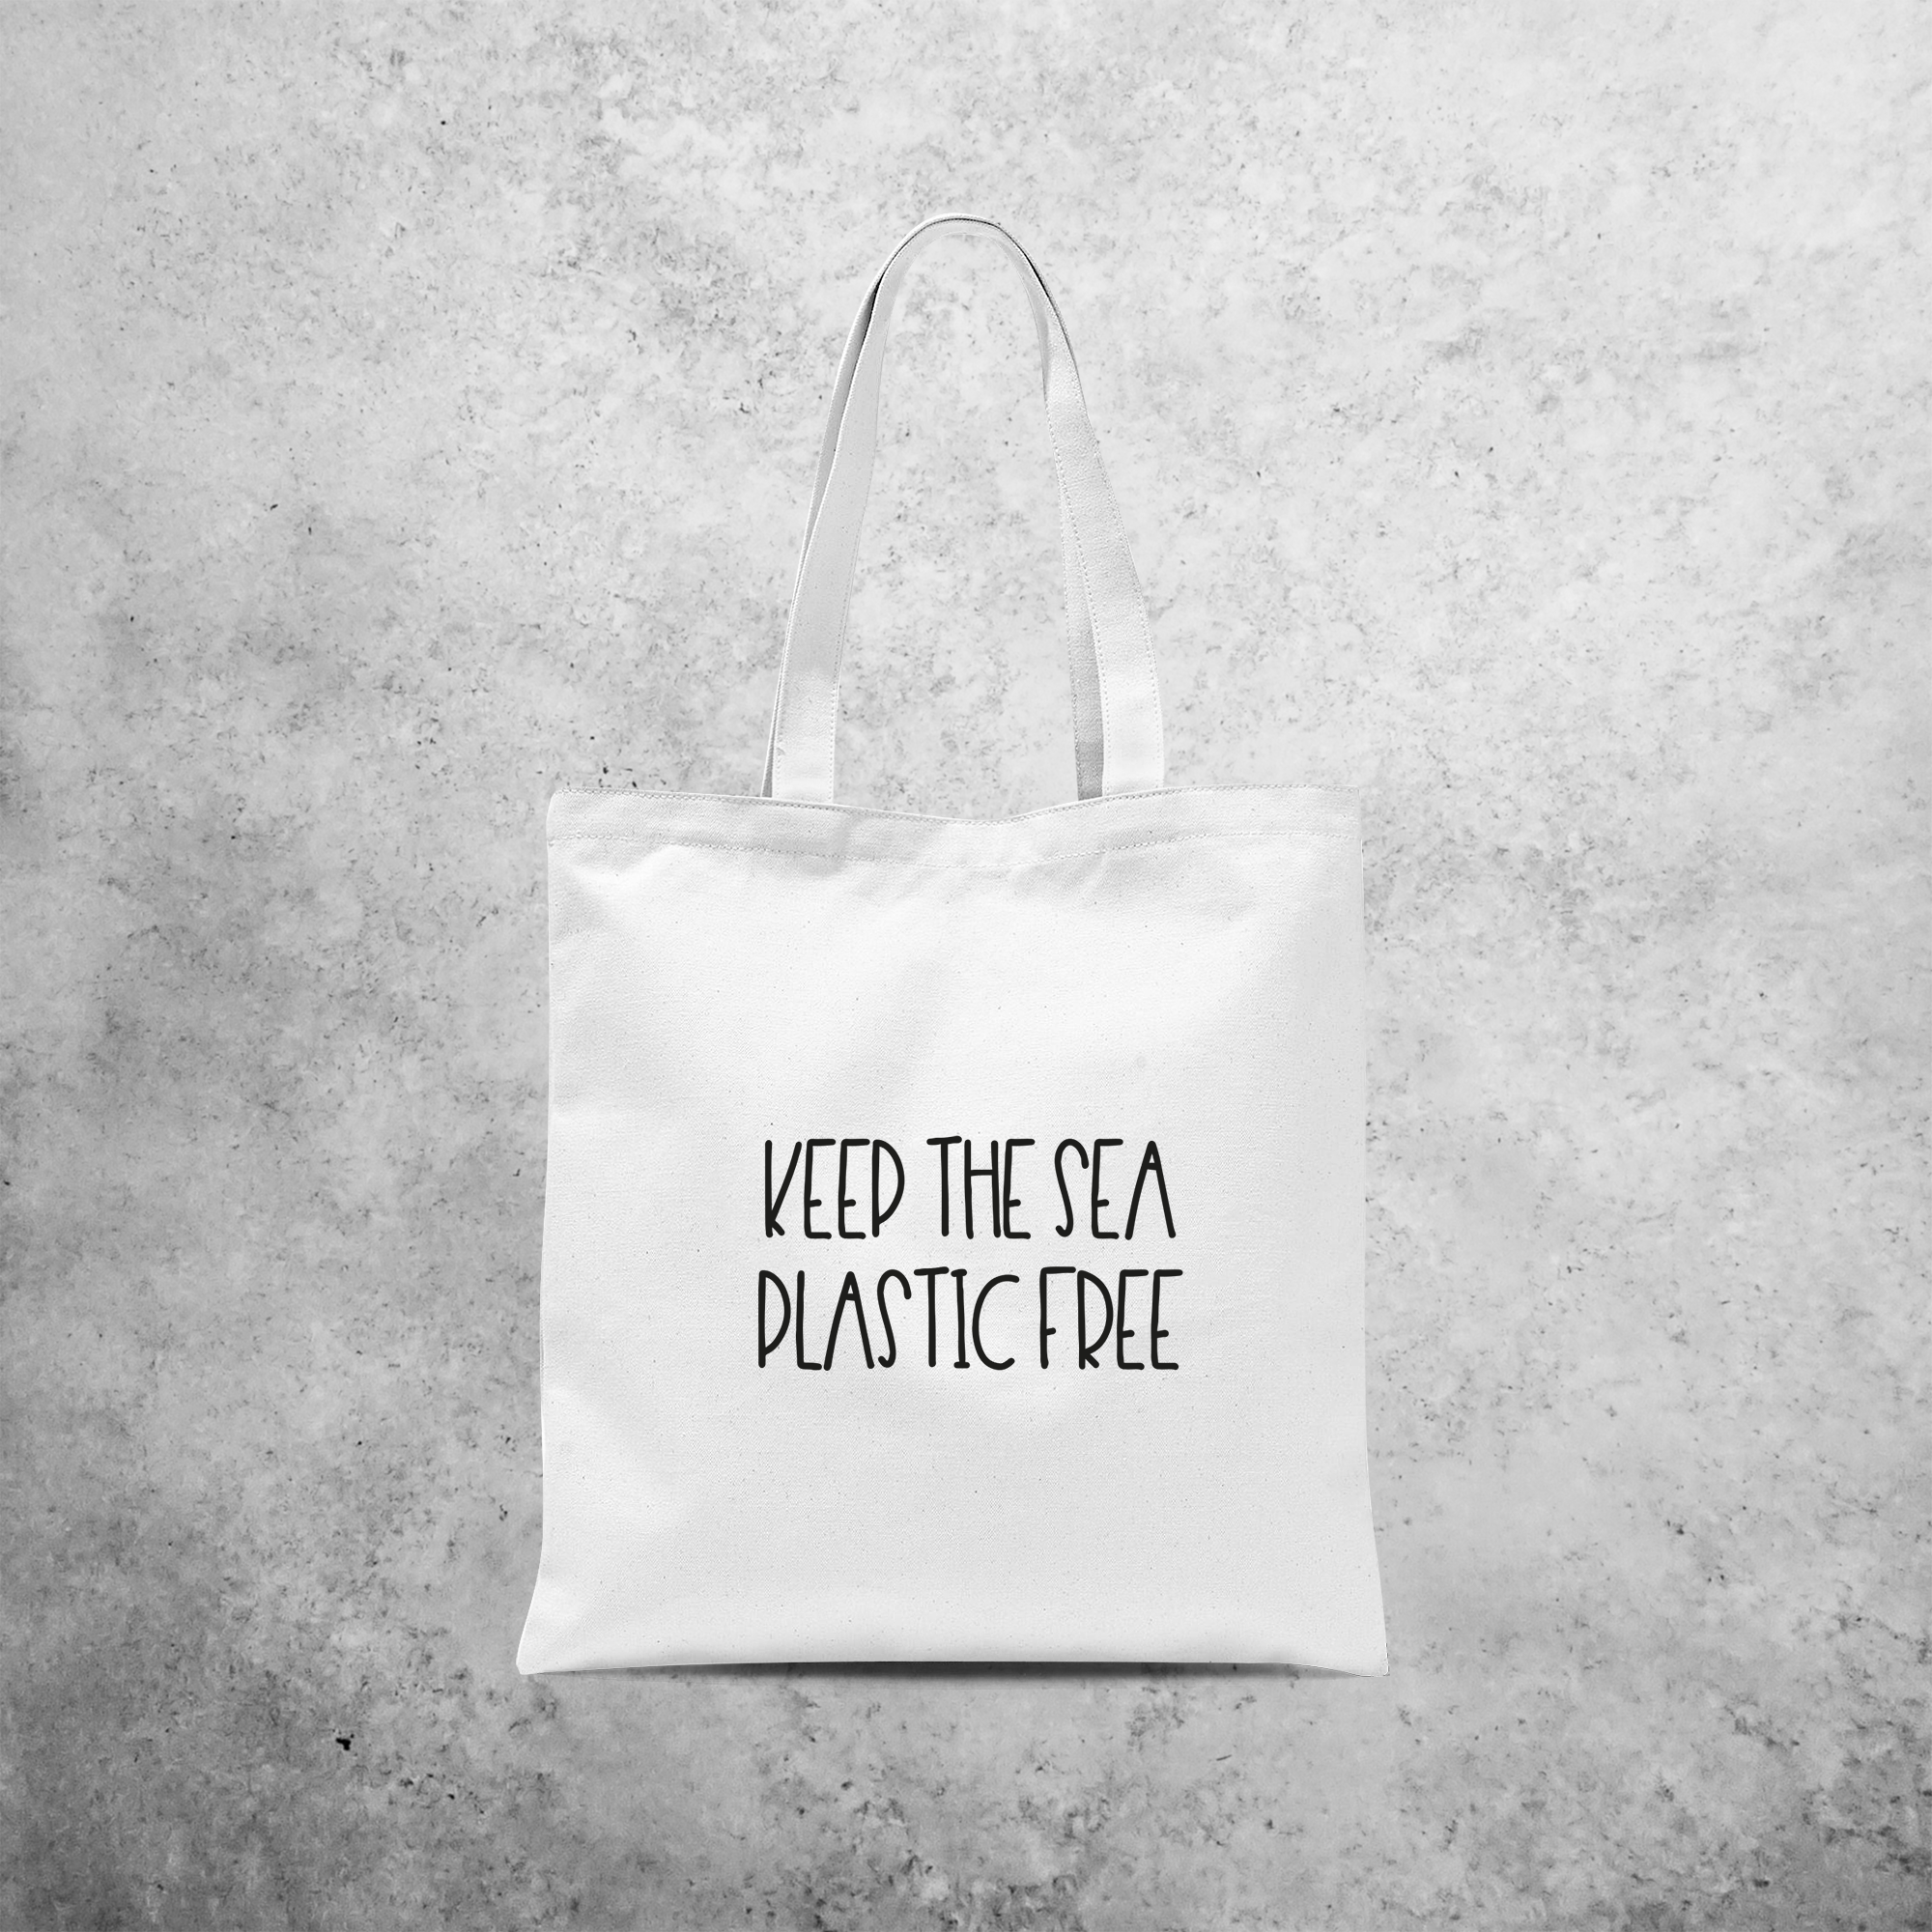 'Keep the sea plastic free' tote bag